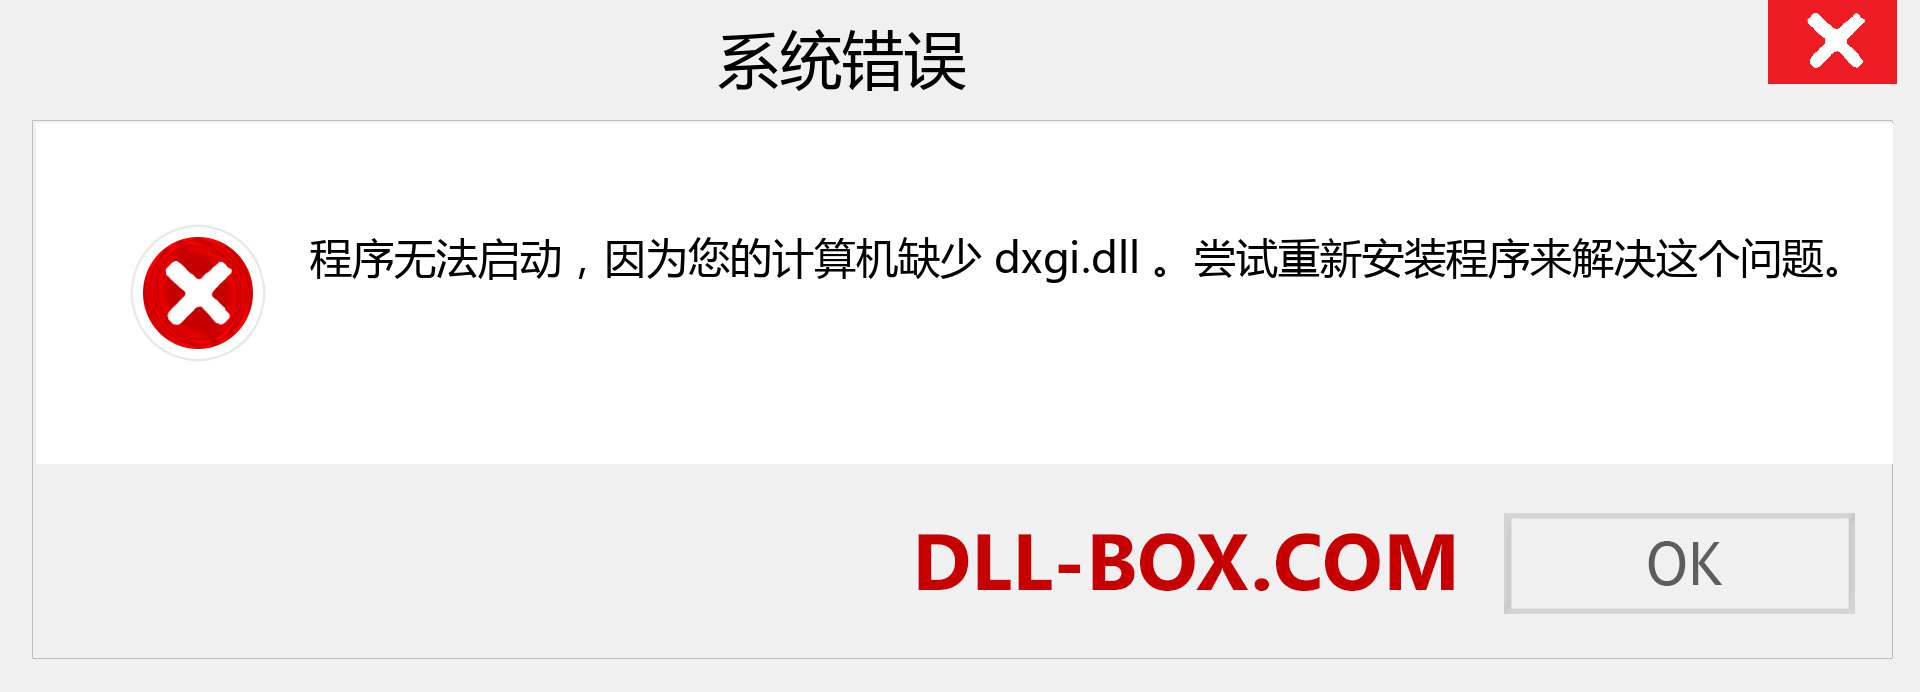 dxgi.dll 文件丢失？。 适用于 Windows 7、8、10 的下载 - 修复 Windows、照片、图像上的 dxgi dll 丢失错误